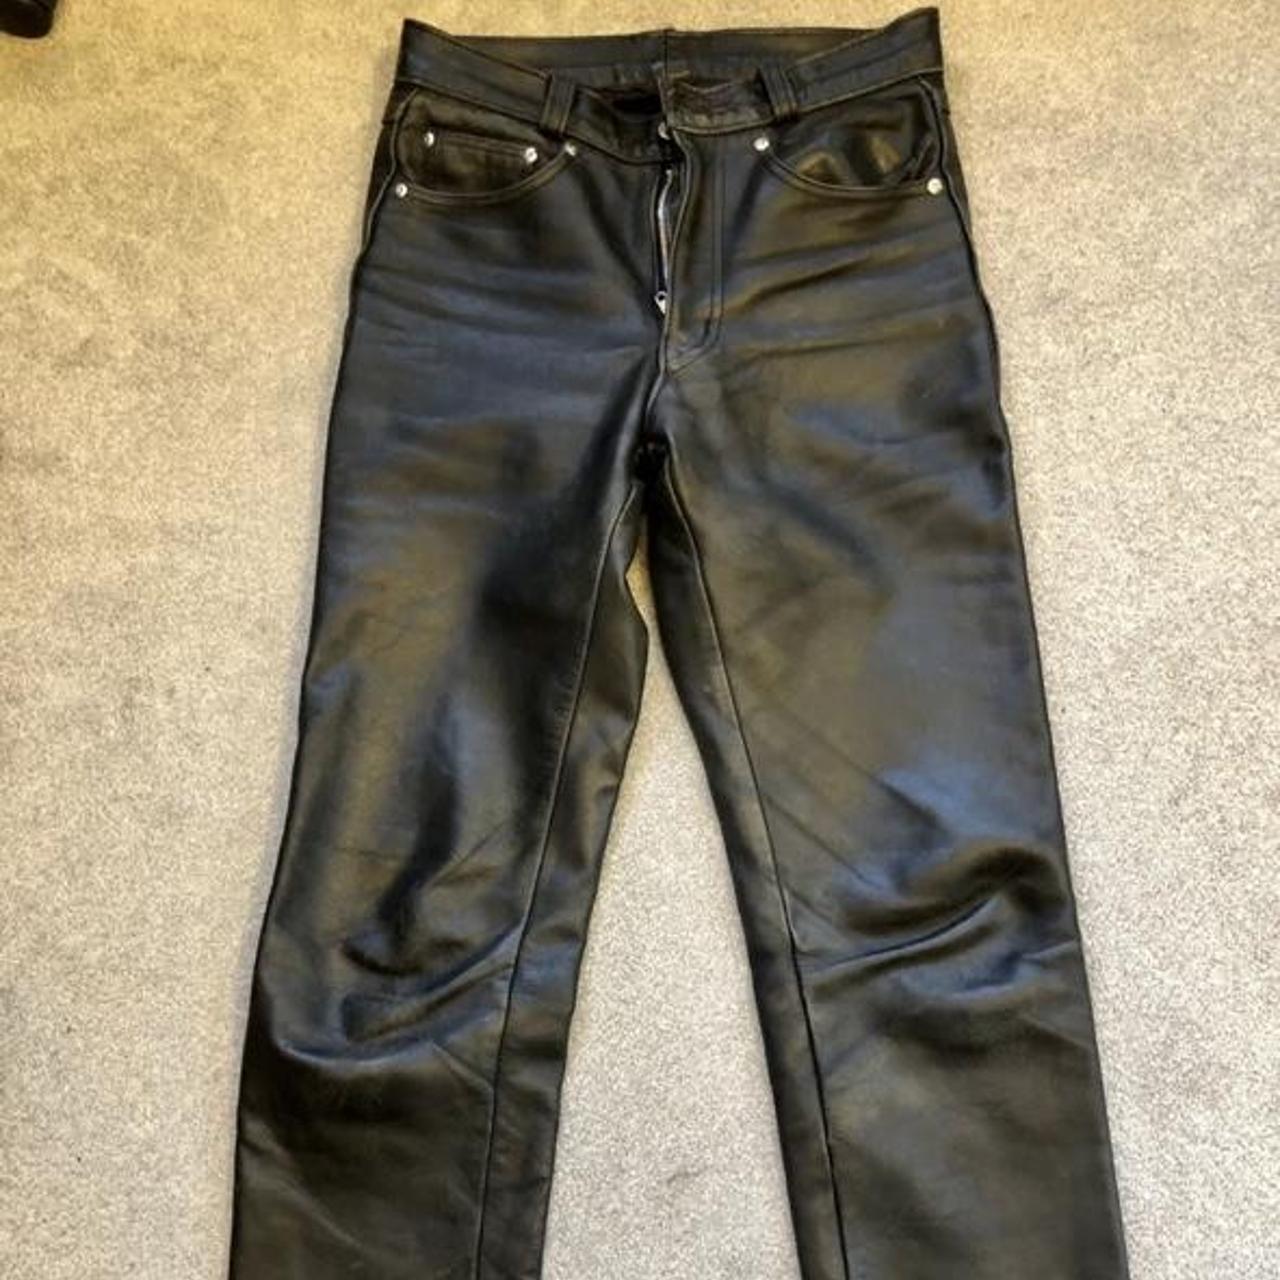 Vintage Leather Trousers Size 30 Schott... - Depop